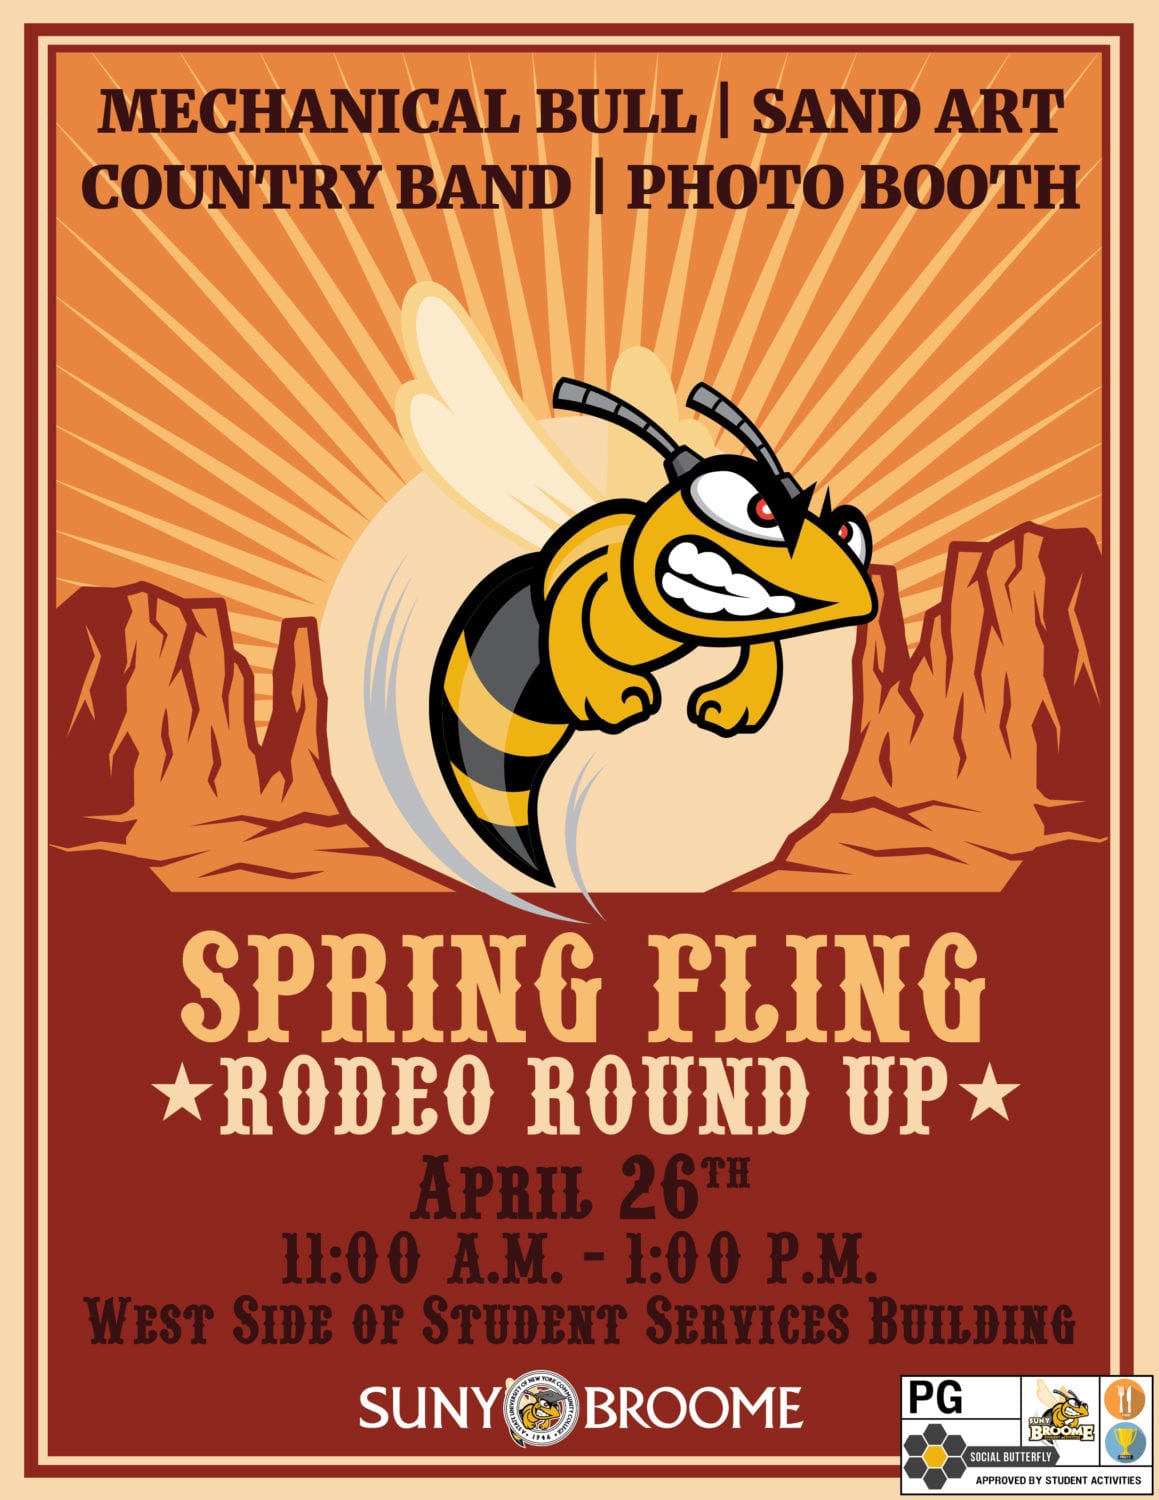 Spring Fling Rodeo Roundup on April 26